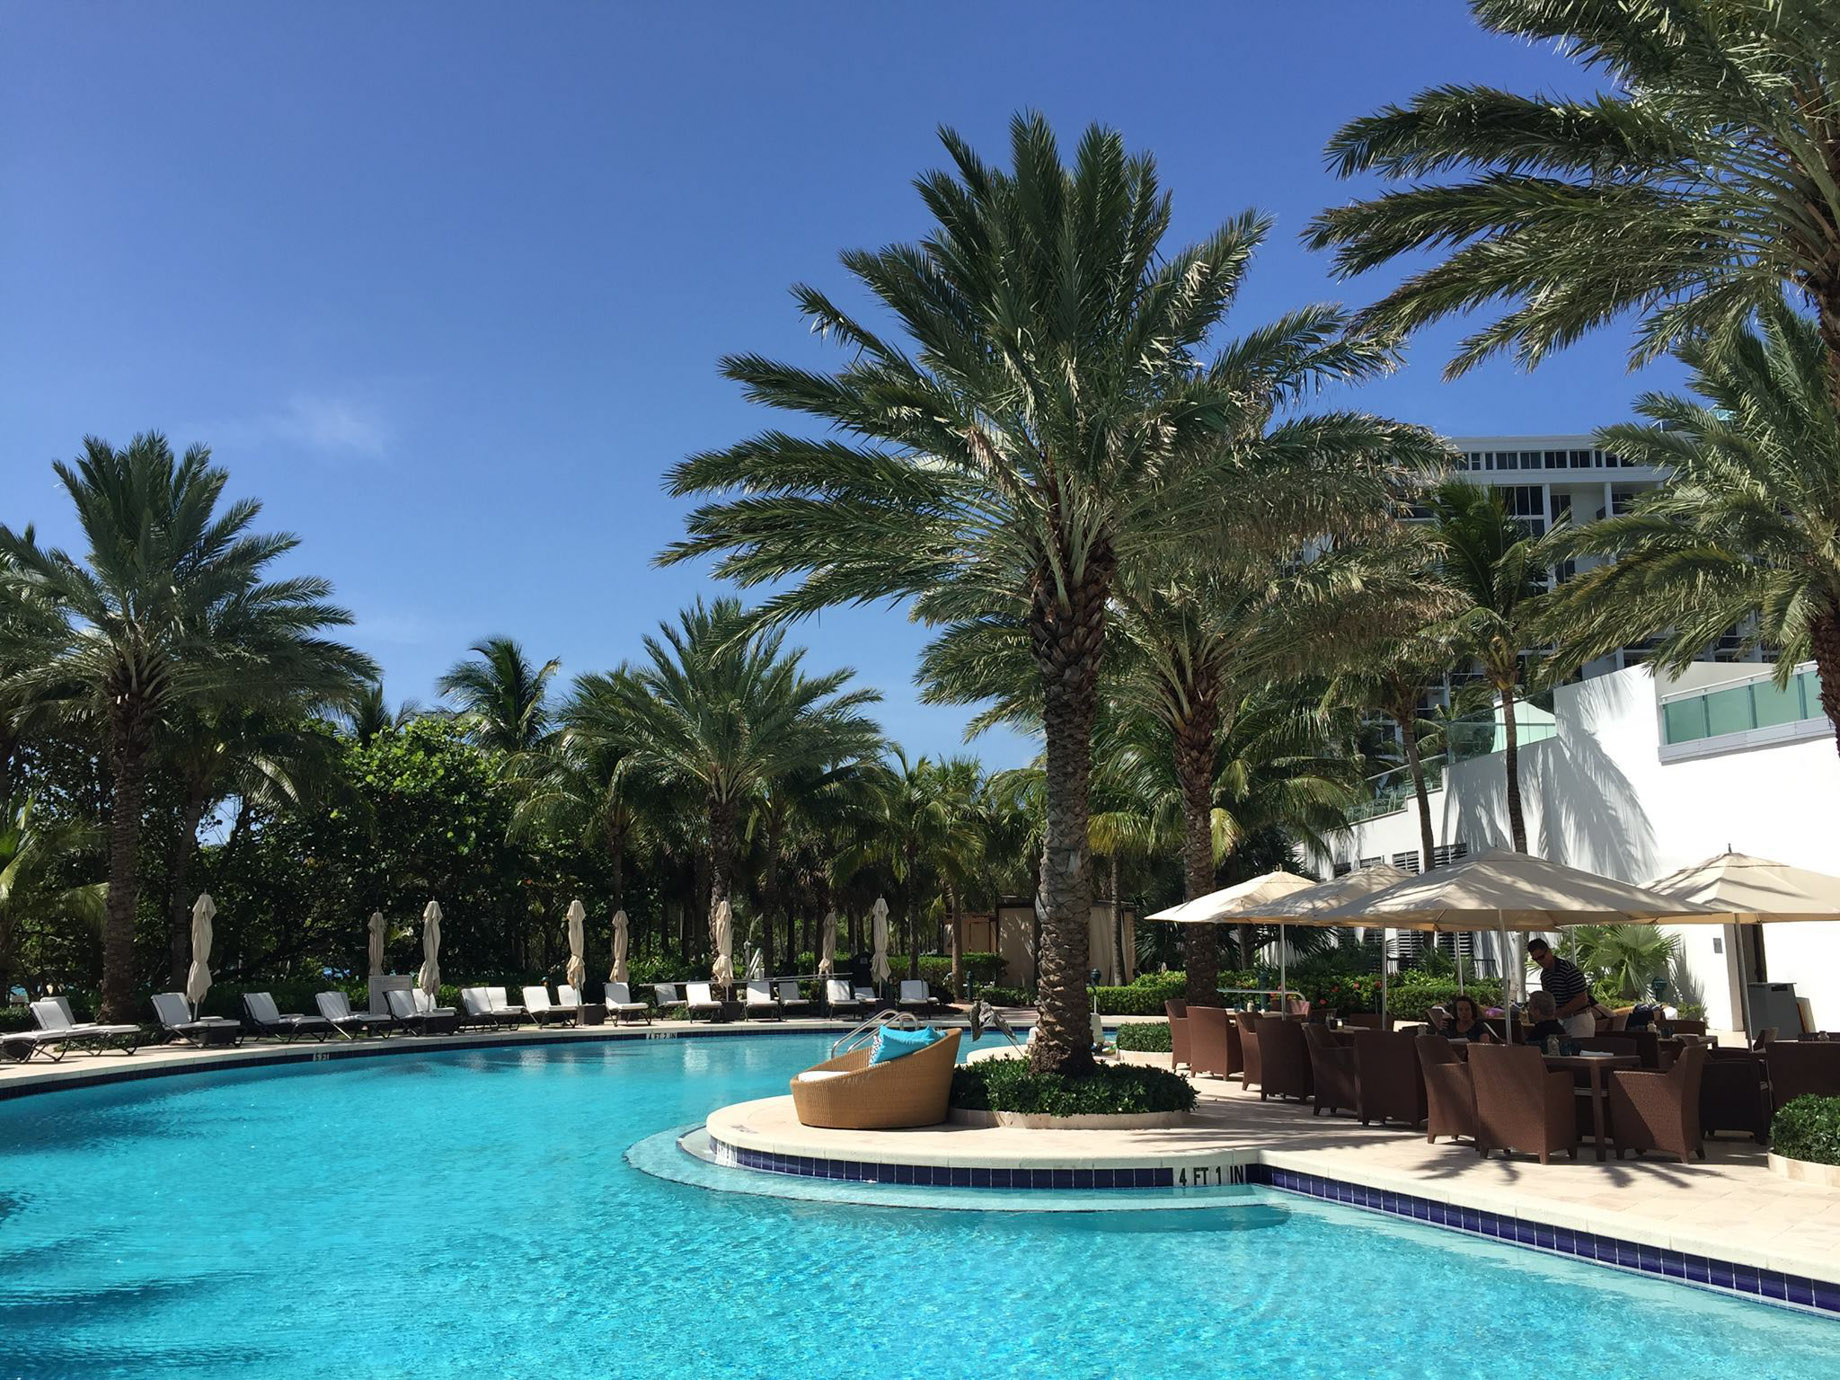 The Ritz-Carlton Bal Harbour, Miami Resort – Bal Harbour, FL, USA – Pool Deck